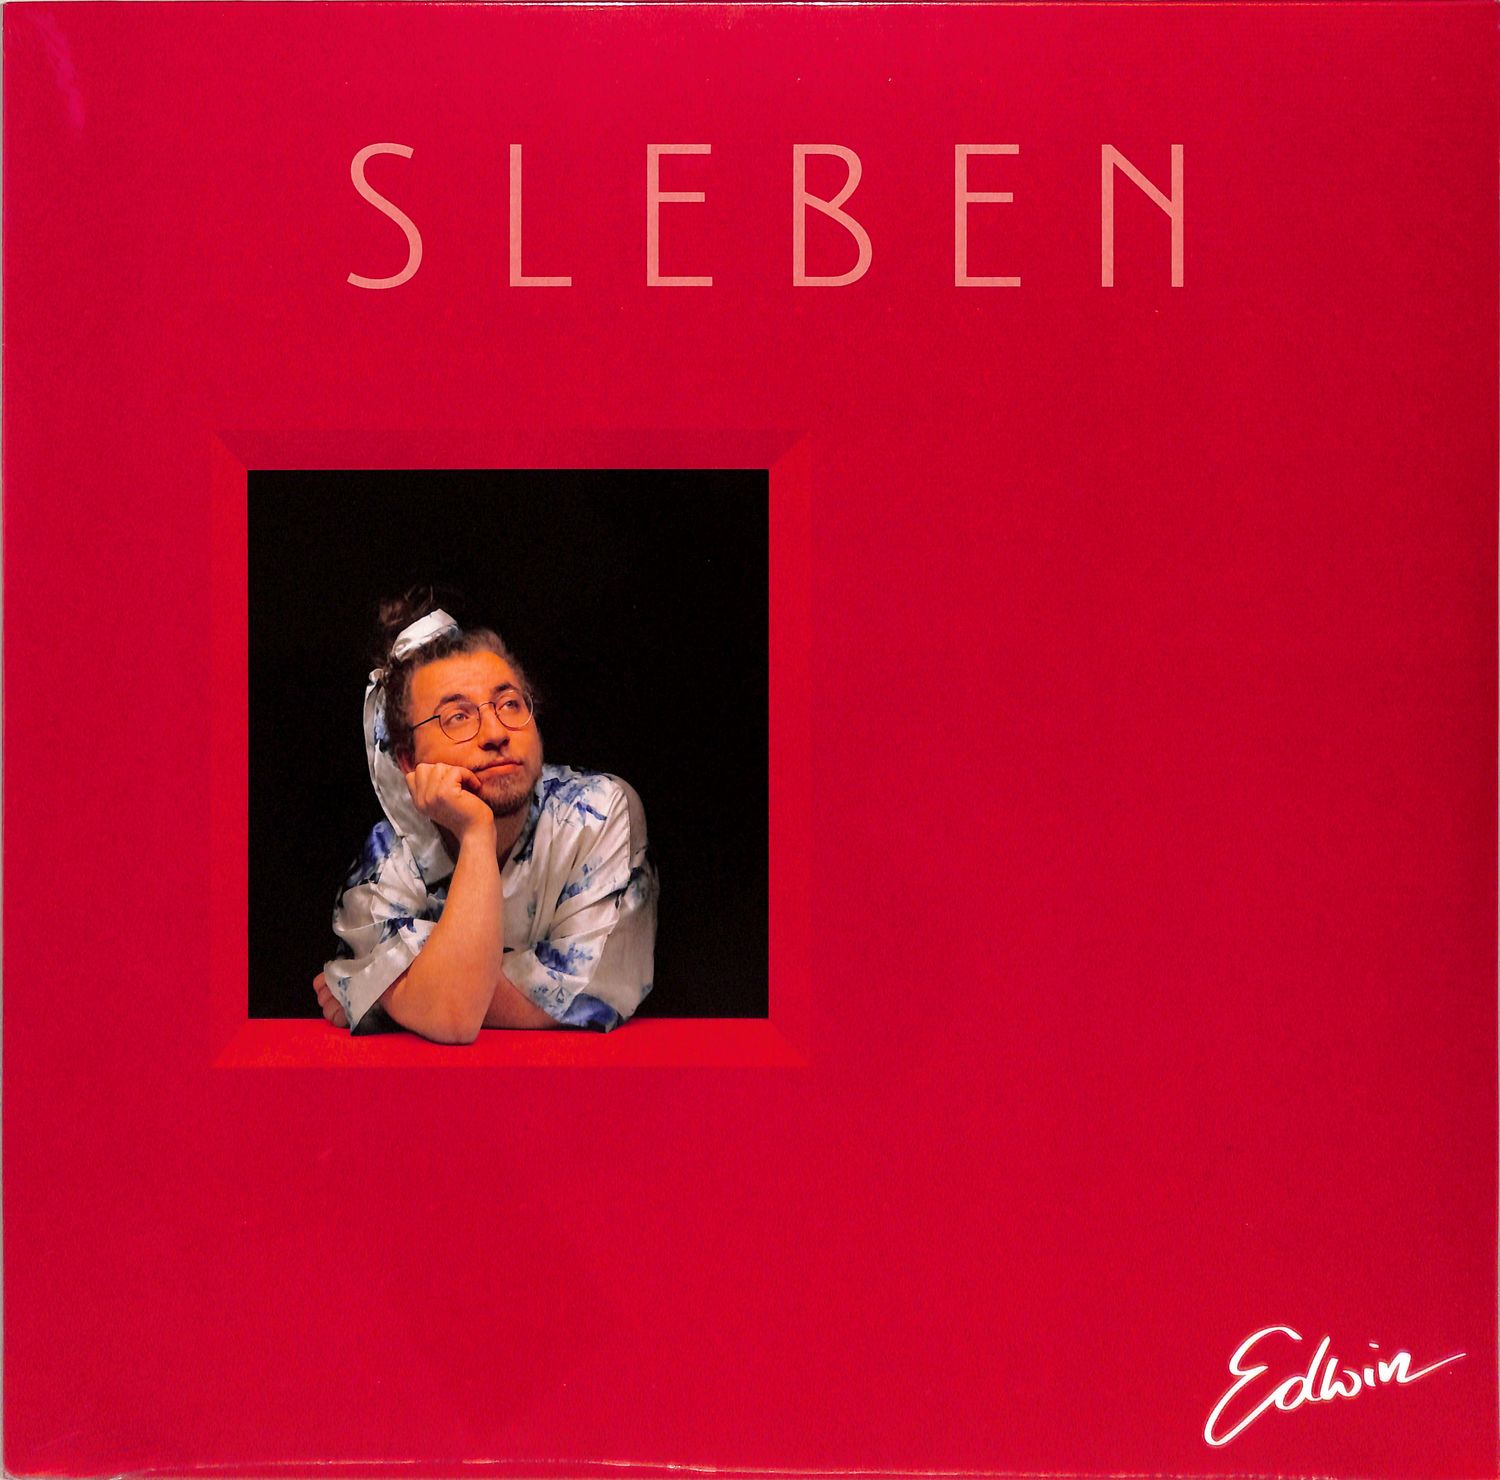 Edwin - SLEBEN 